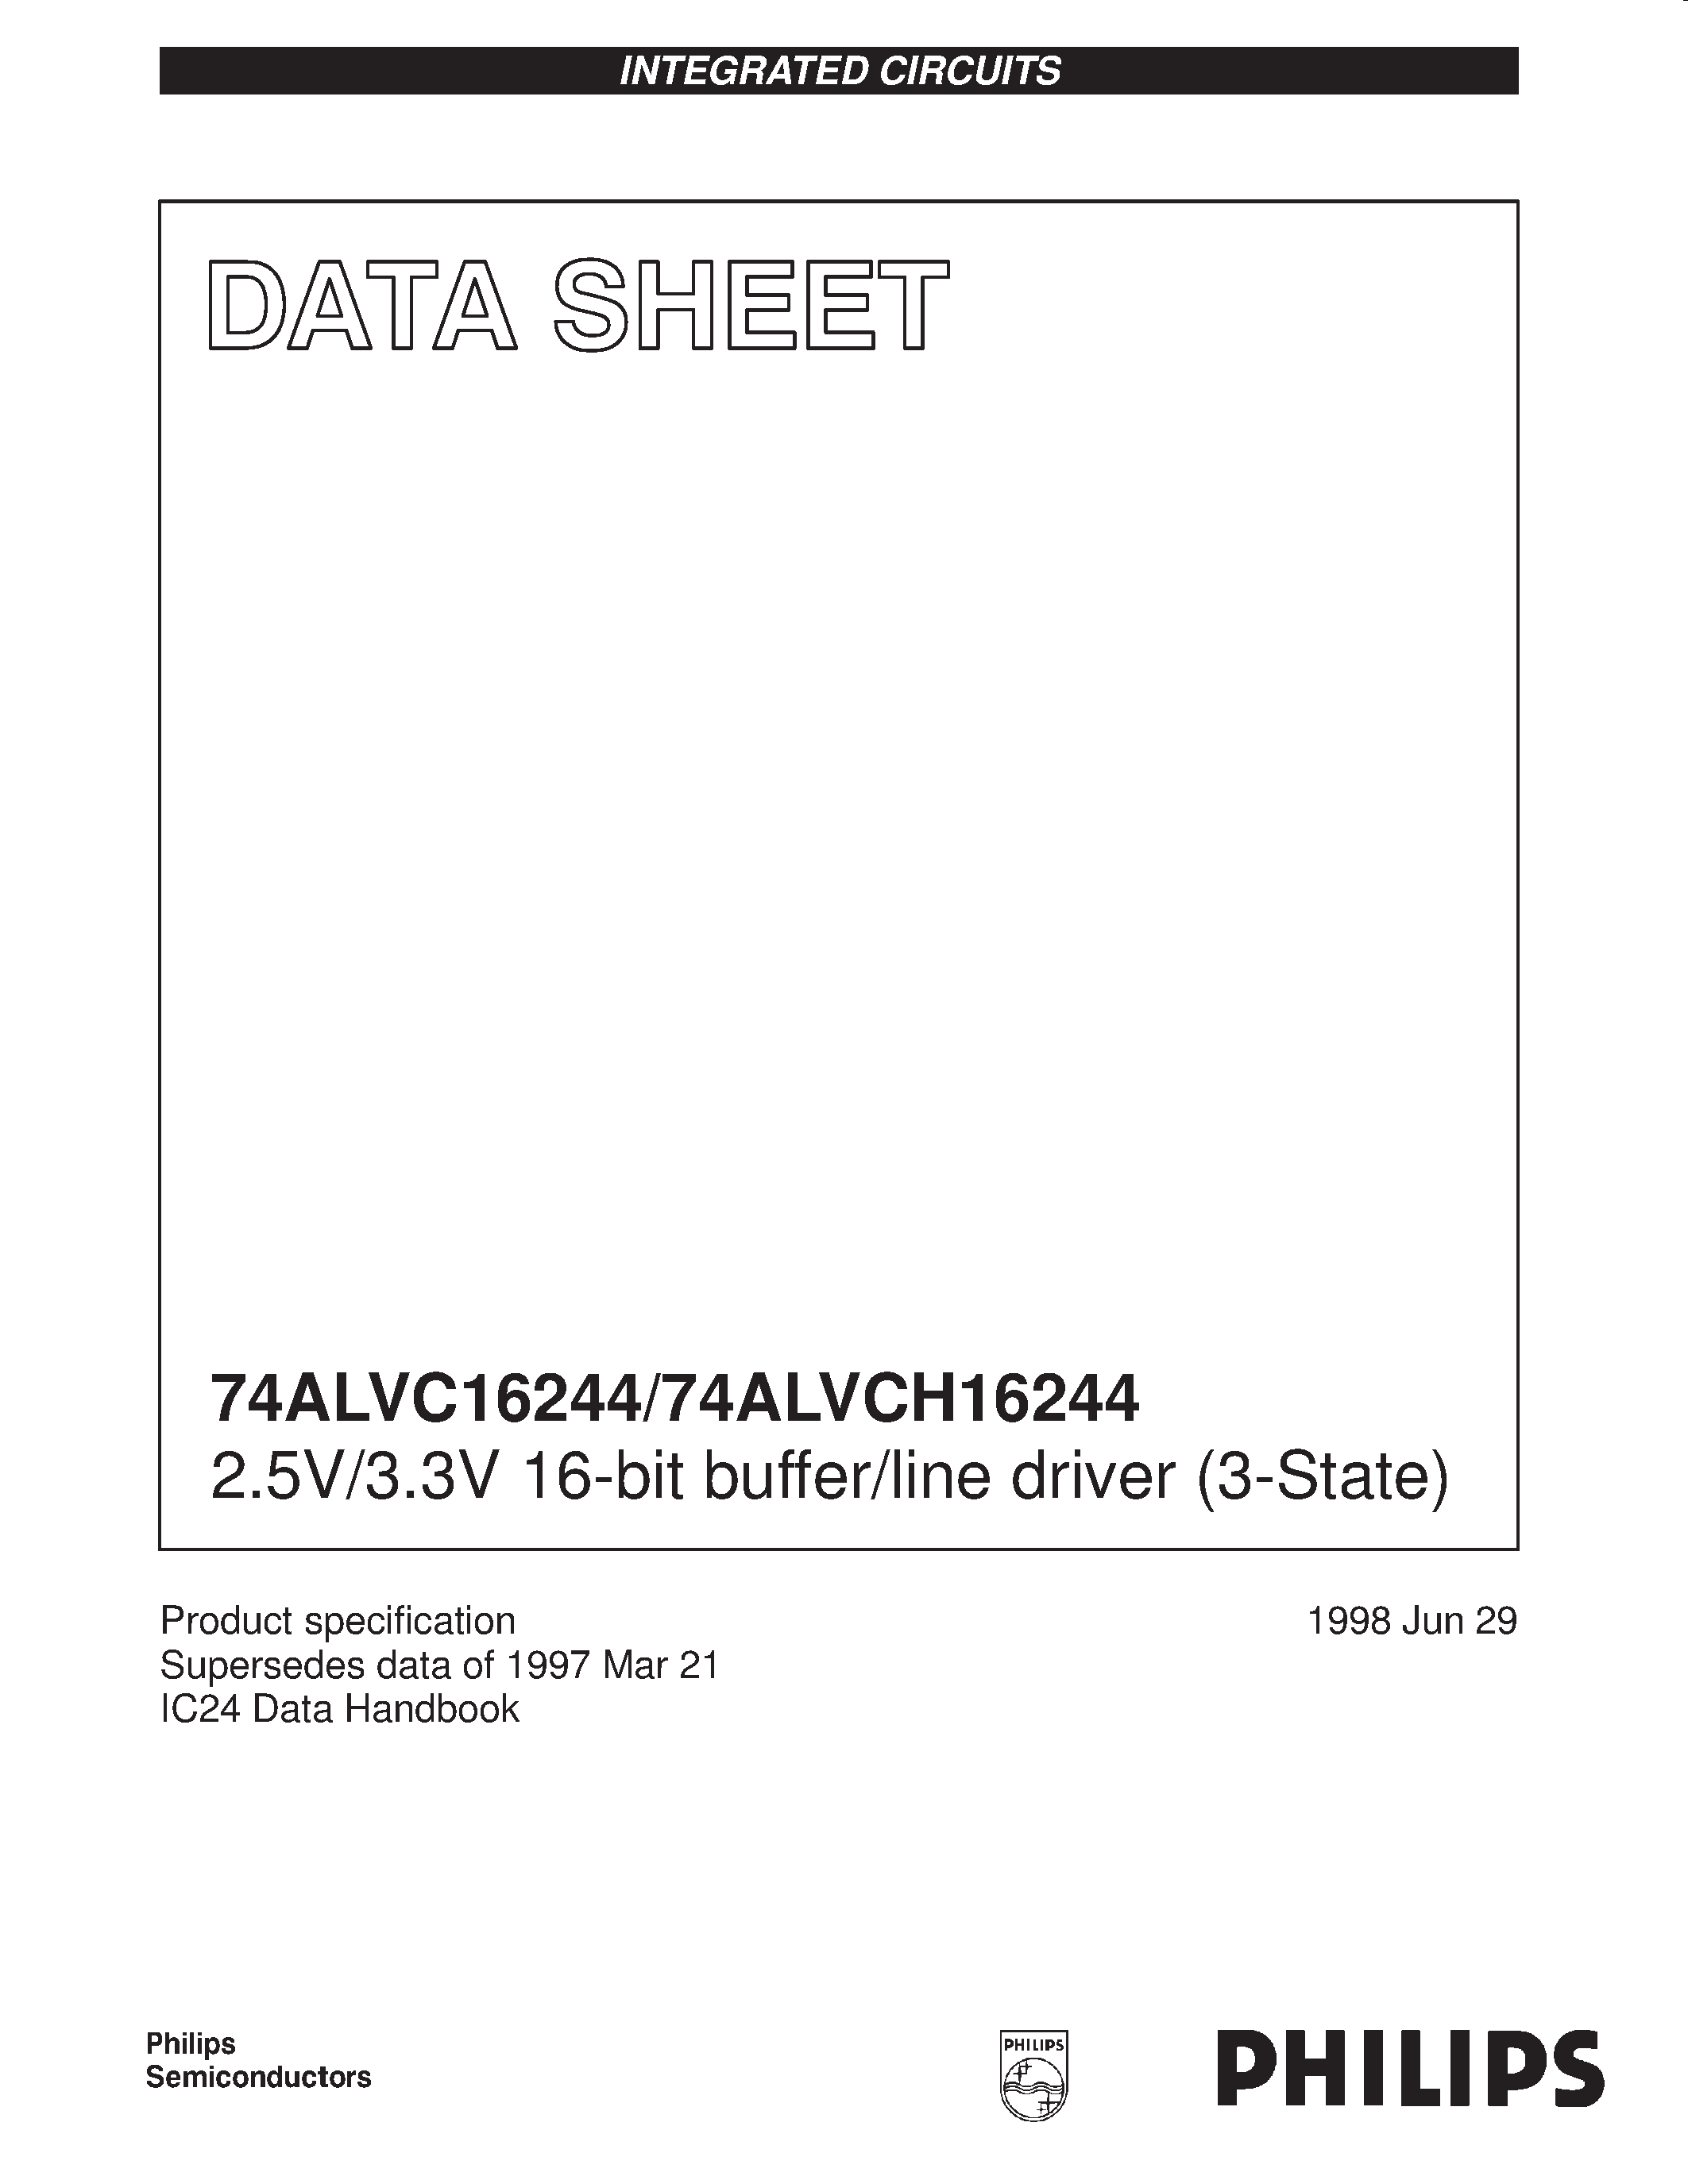 Datasheet 74ALVC16244 - 2.5V/3.3V 16-bit buffer/line driver 3-State page 1